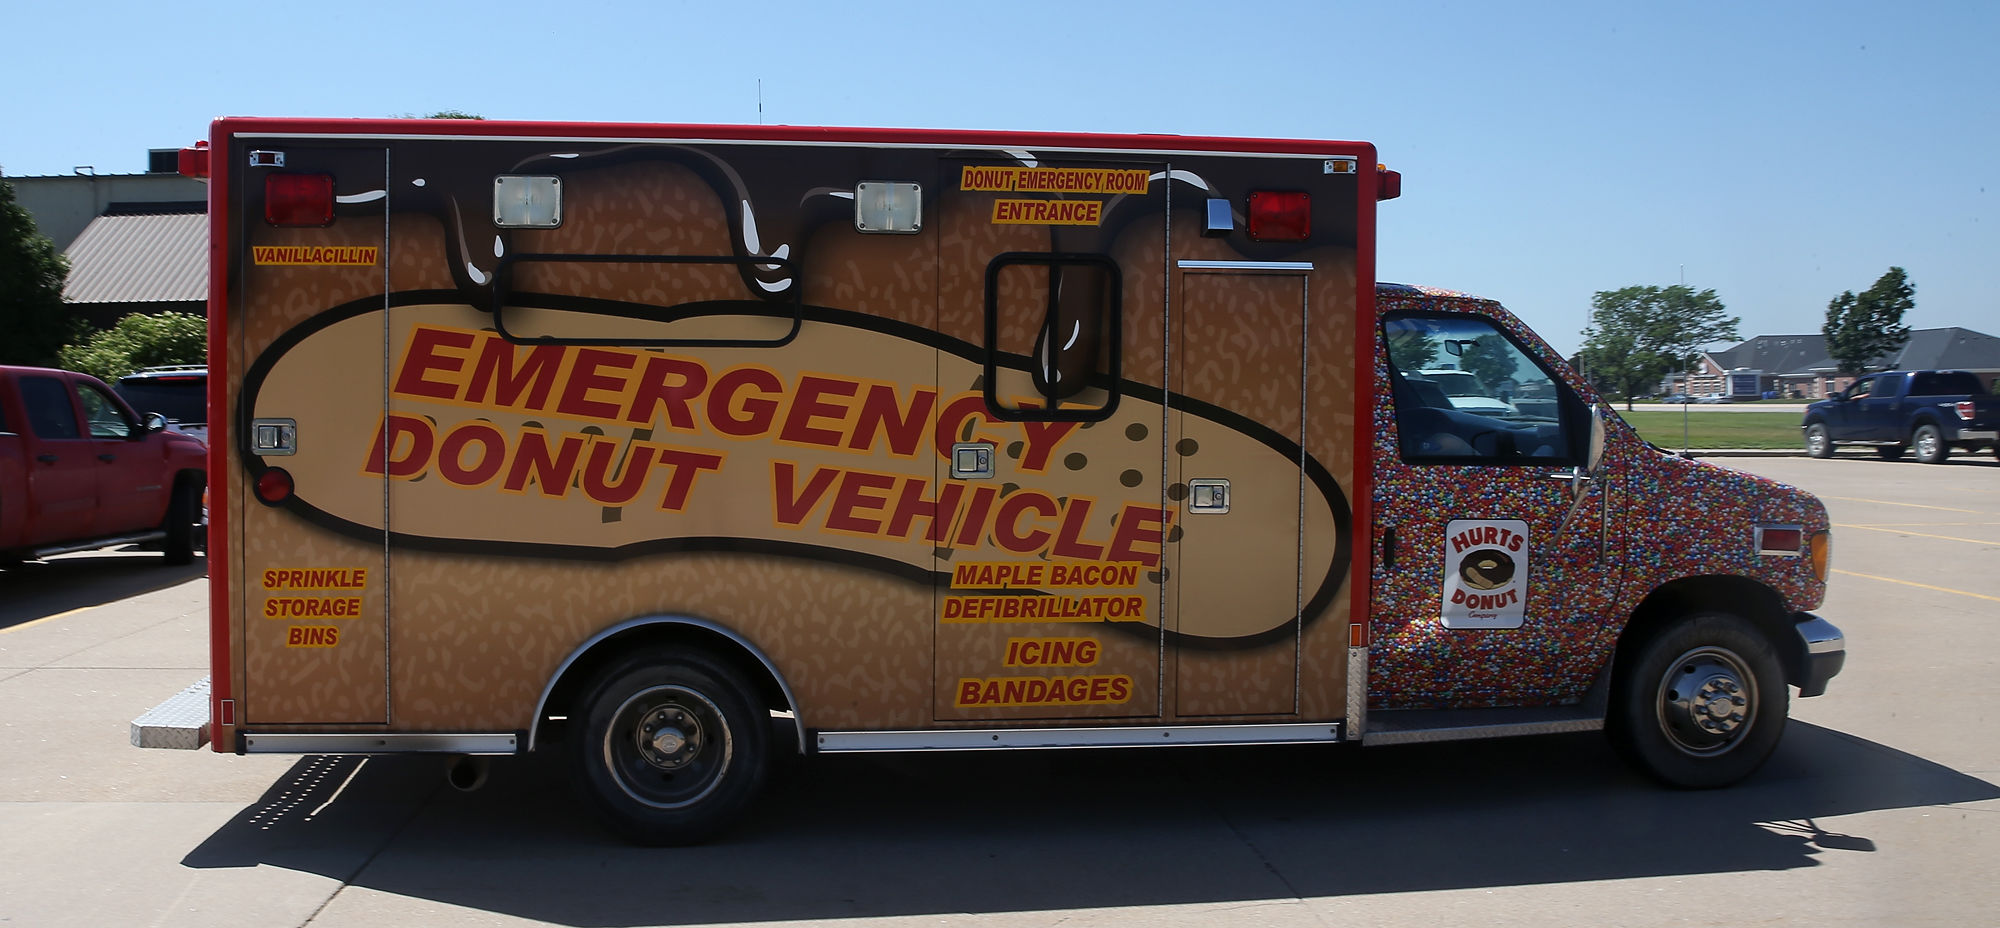 donut county getaway vehicle